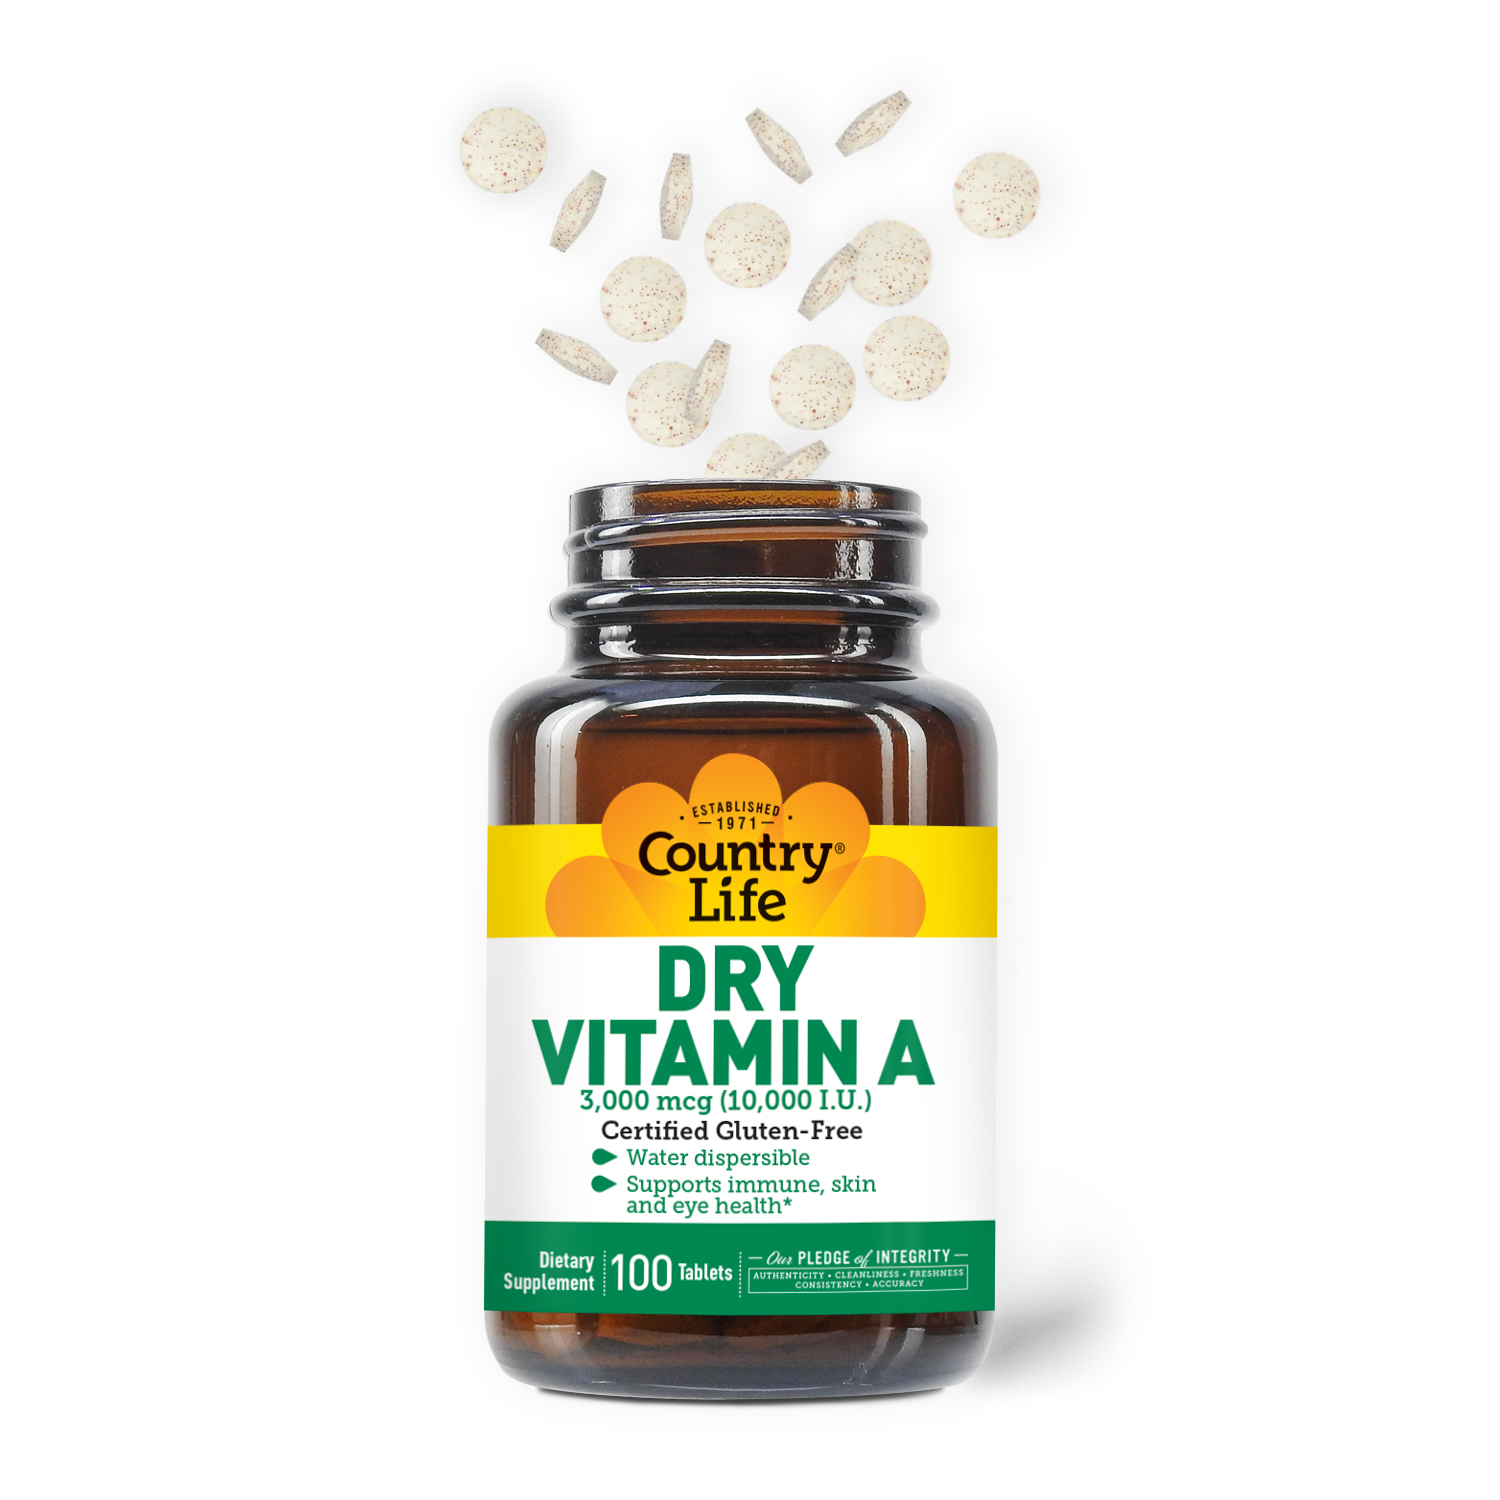 Dry Vitamin A 10,000 I.U.